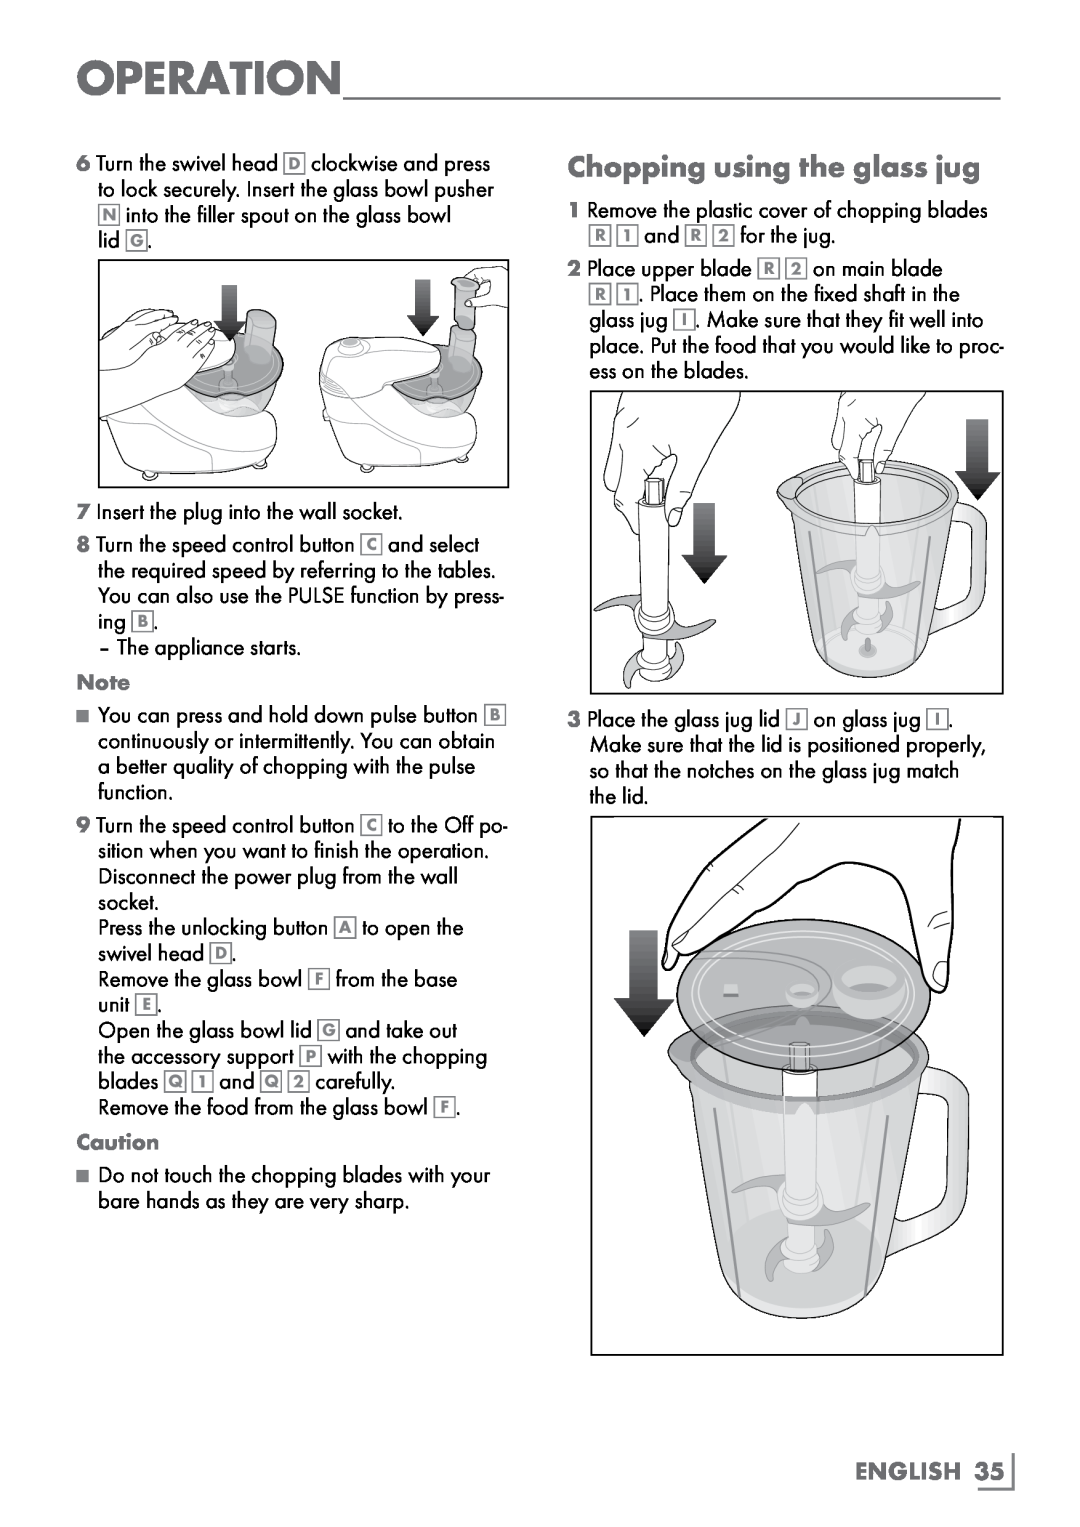 Grundig UM 9050 manual Chopping using the glass jug, Operation, English 